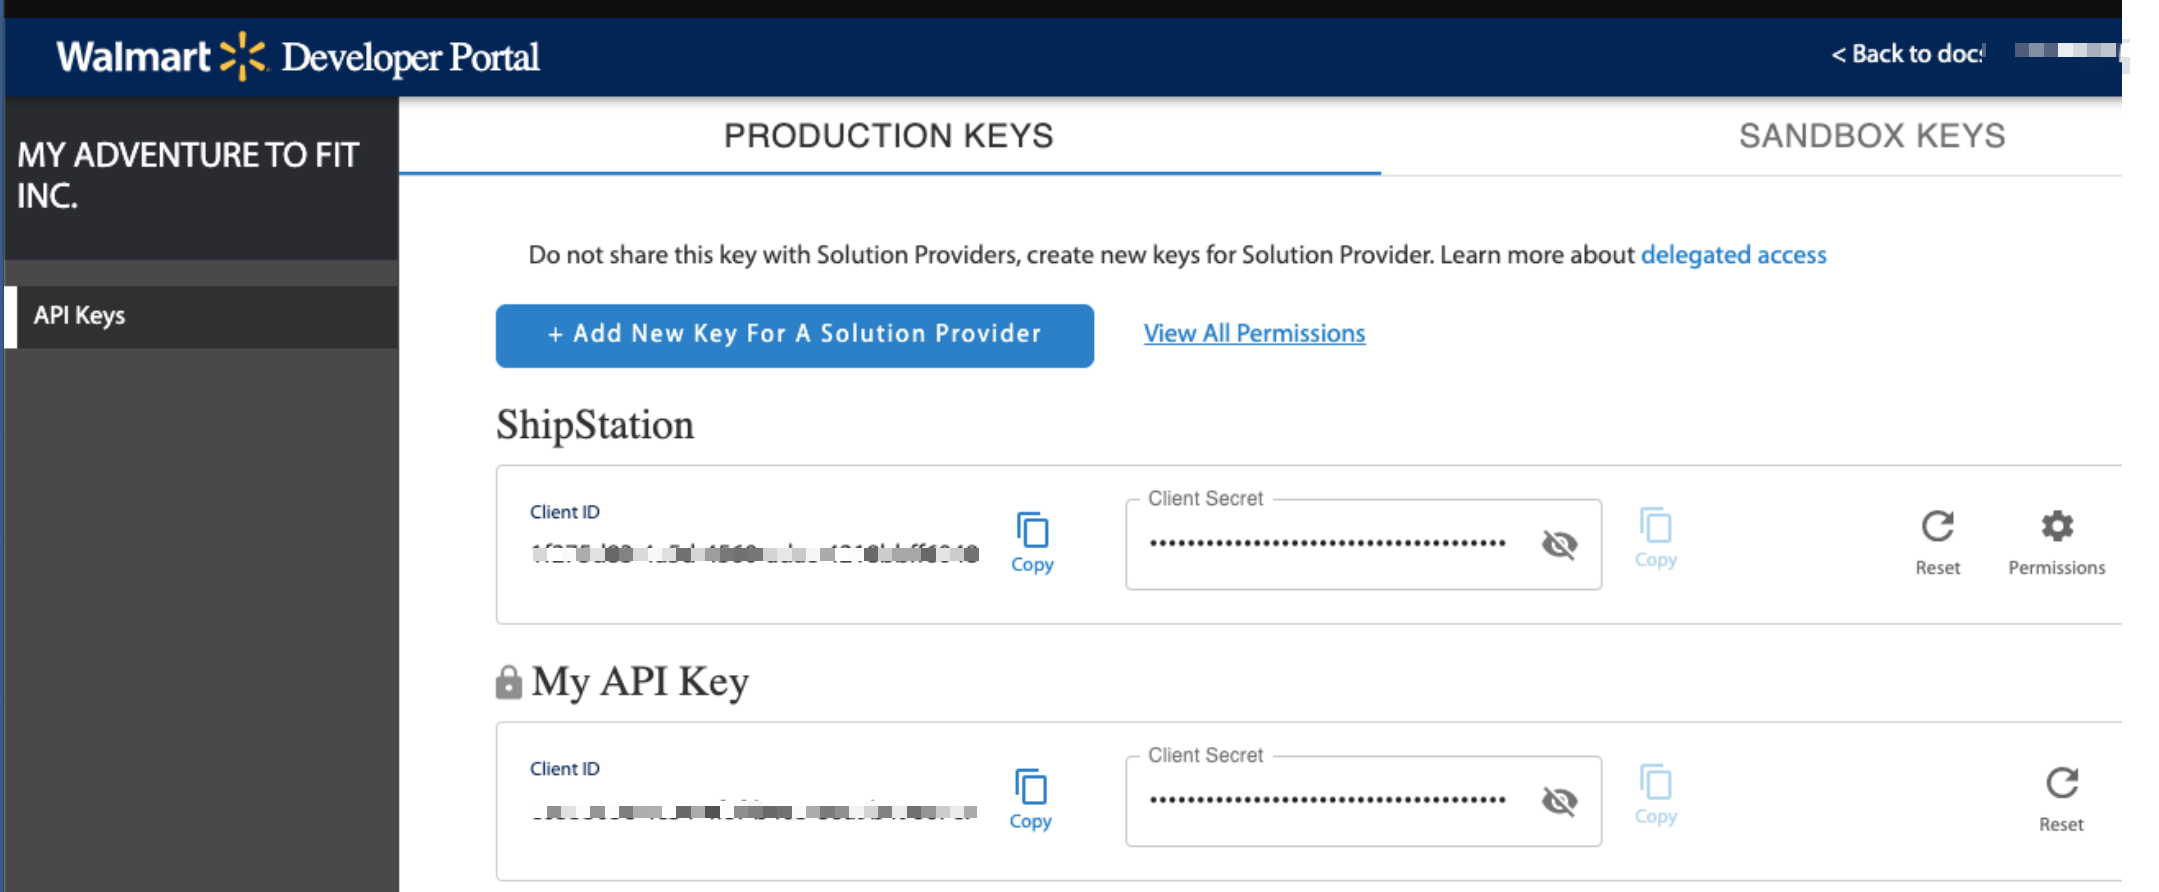 Walmart developer portal showing the production keys for ShipStation.